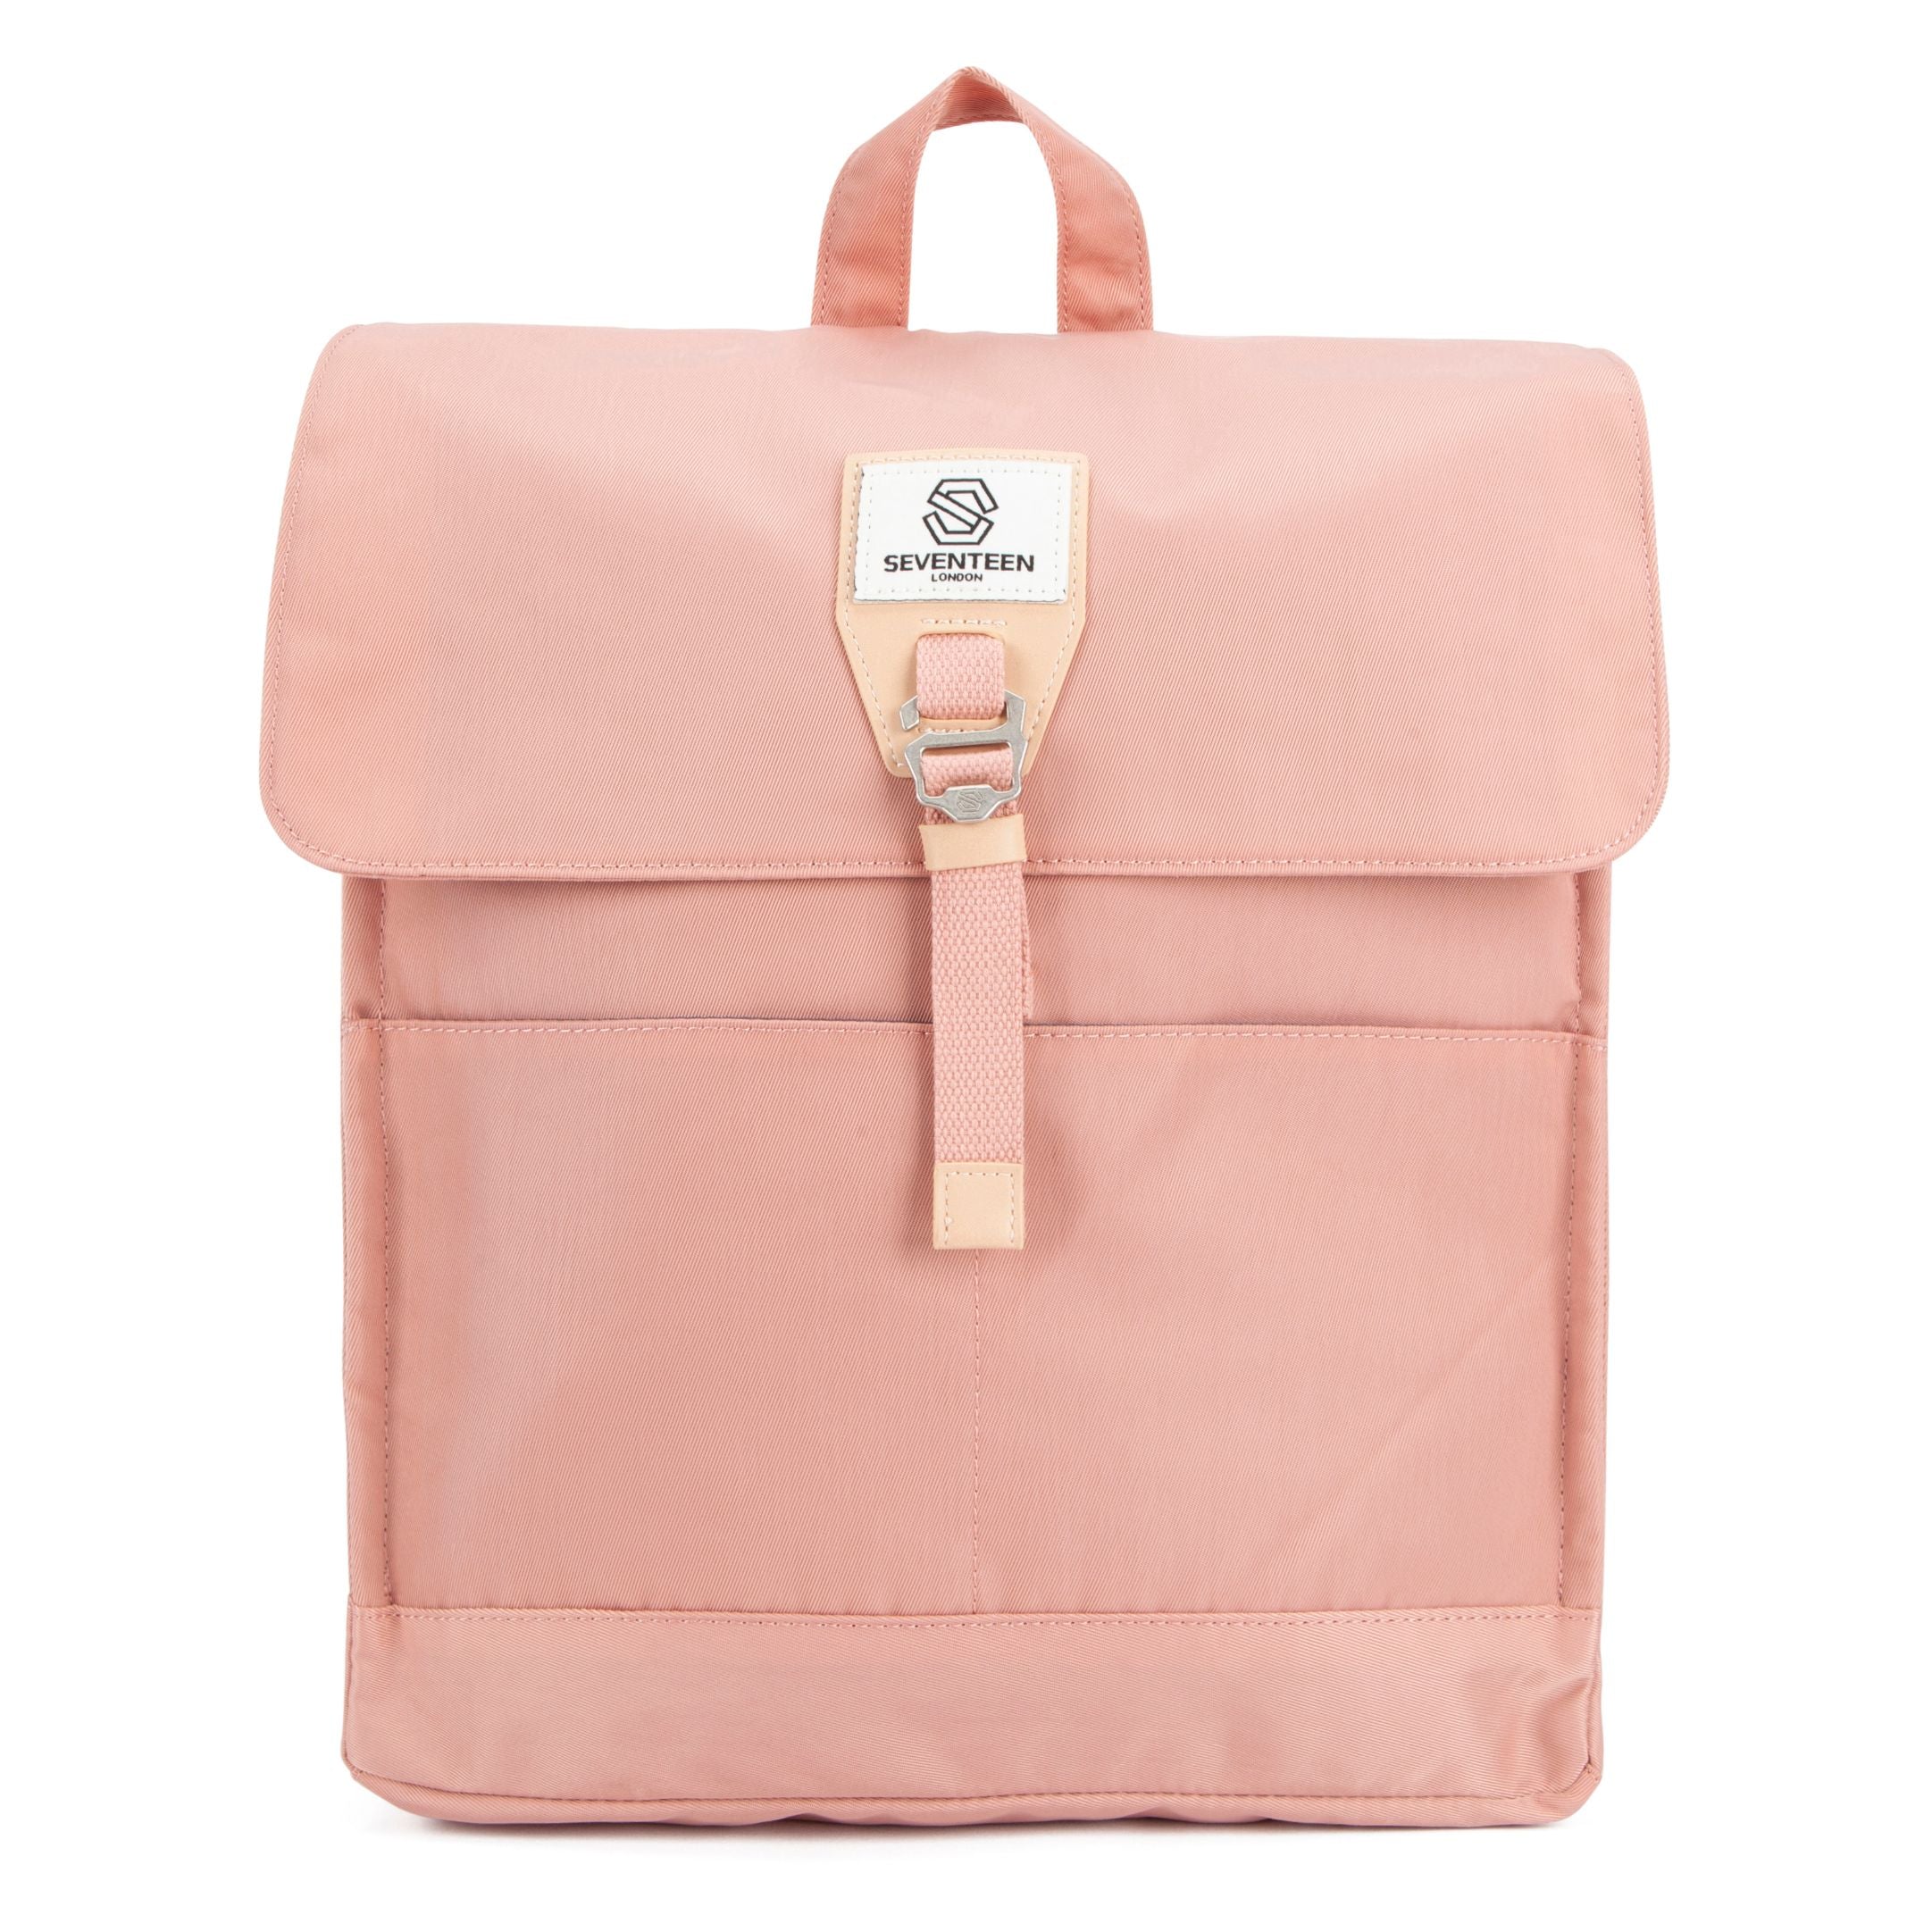 Seventeen London | Stylish & Premium Quality Backpacks